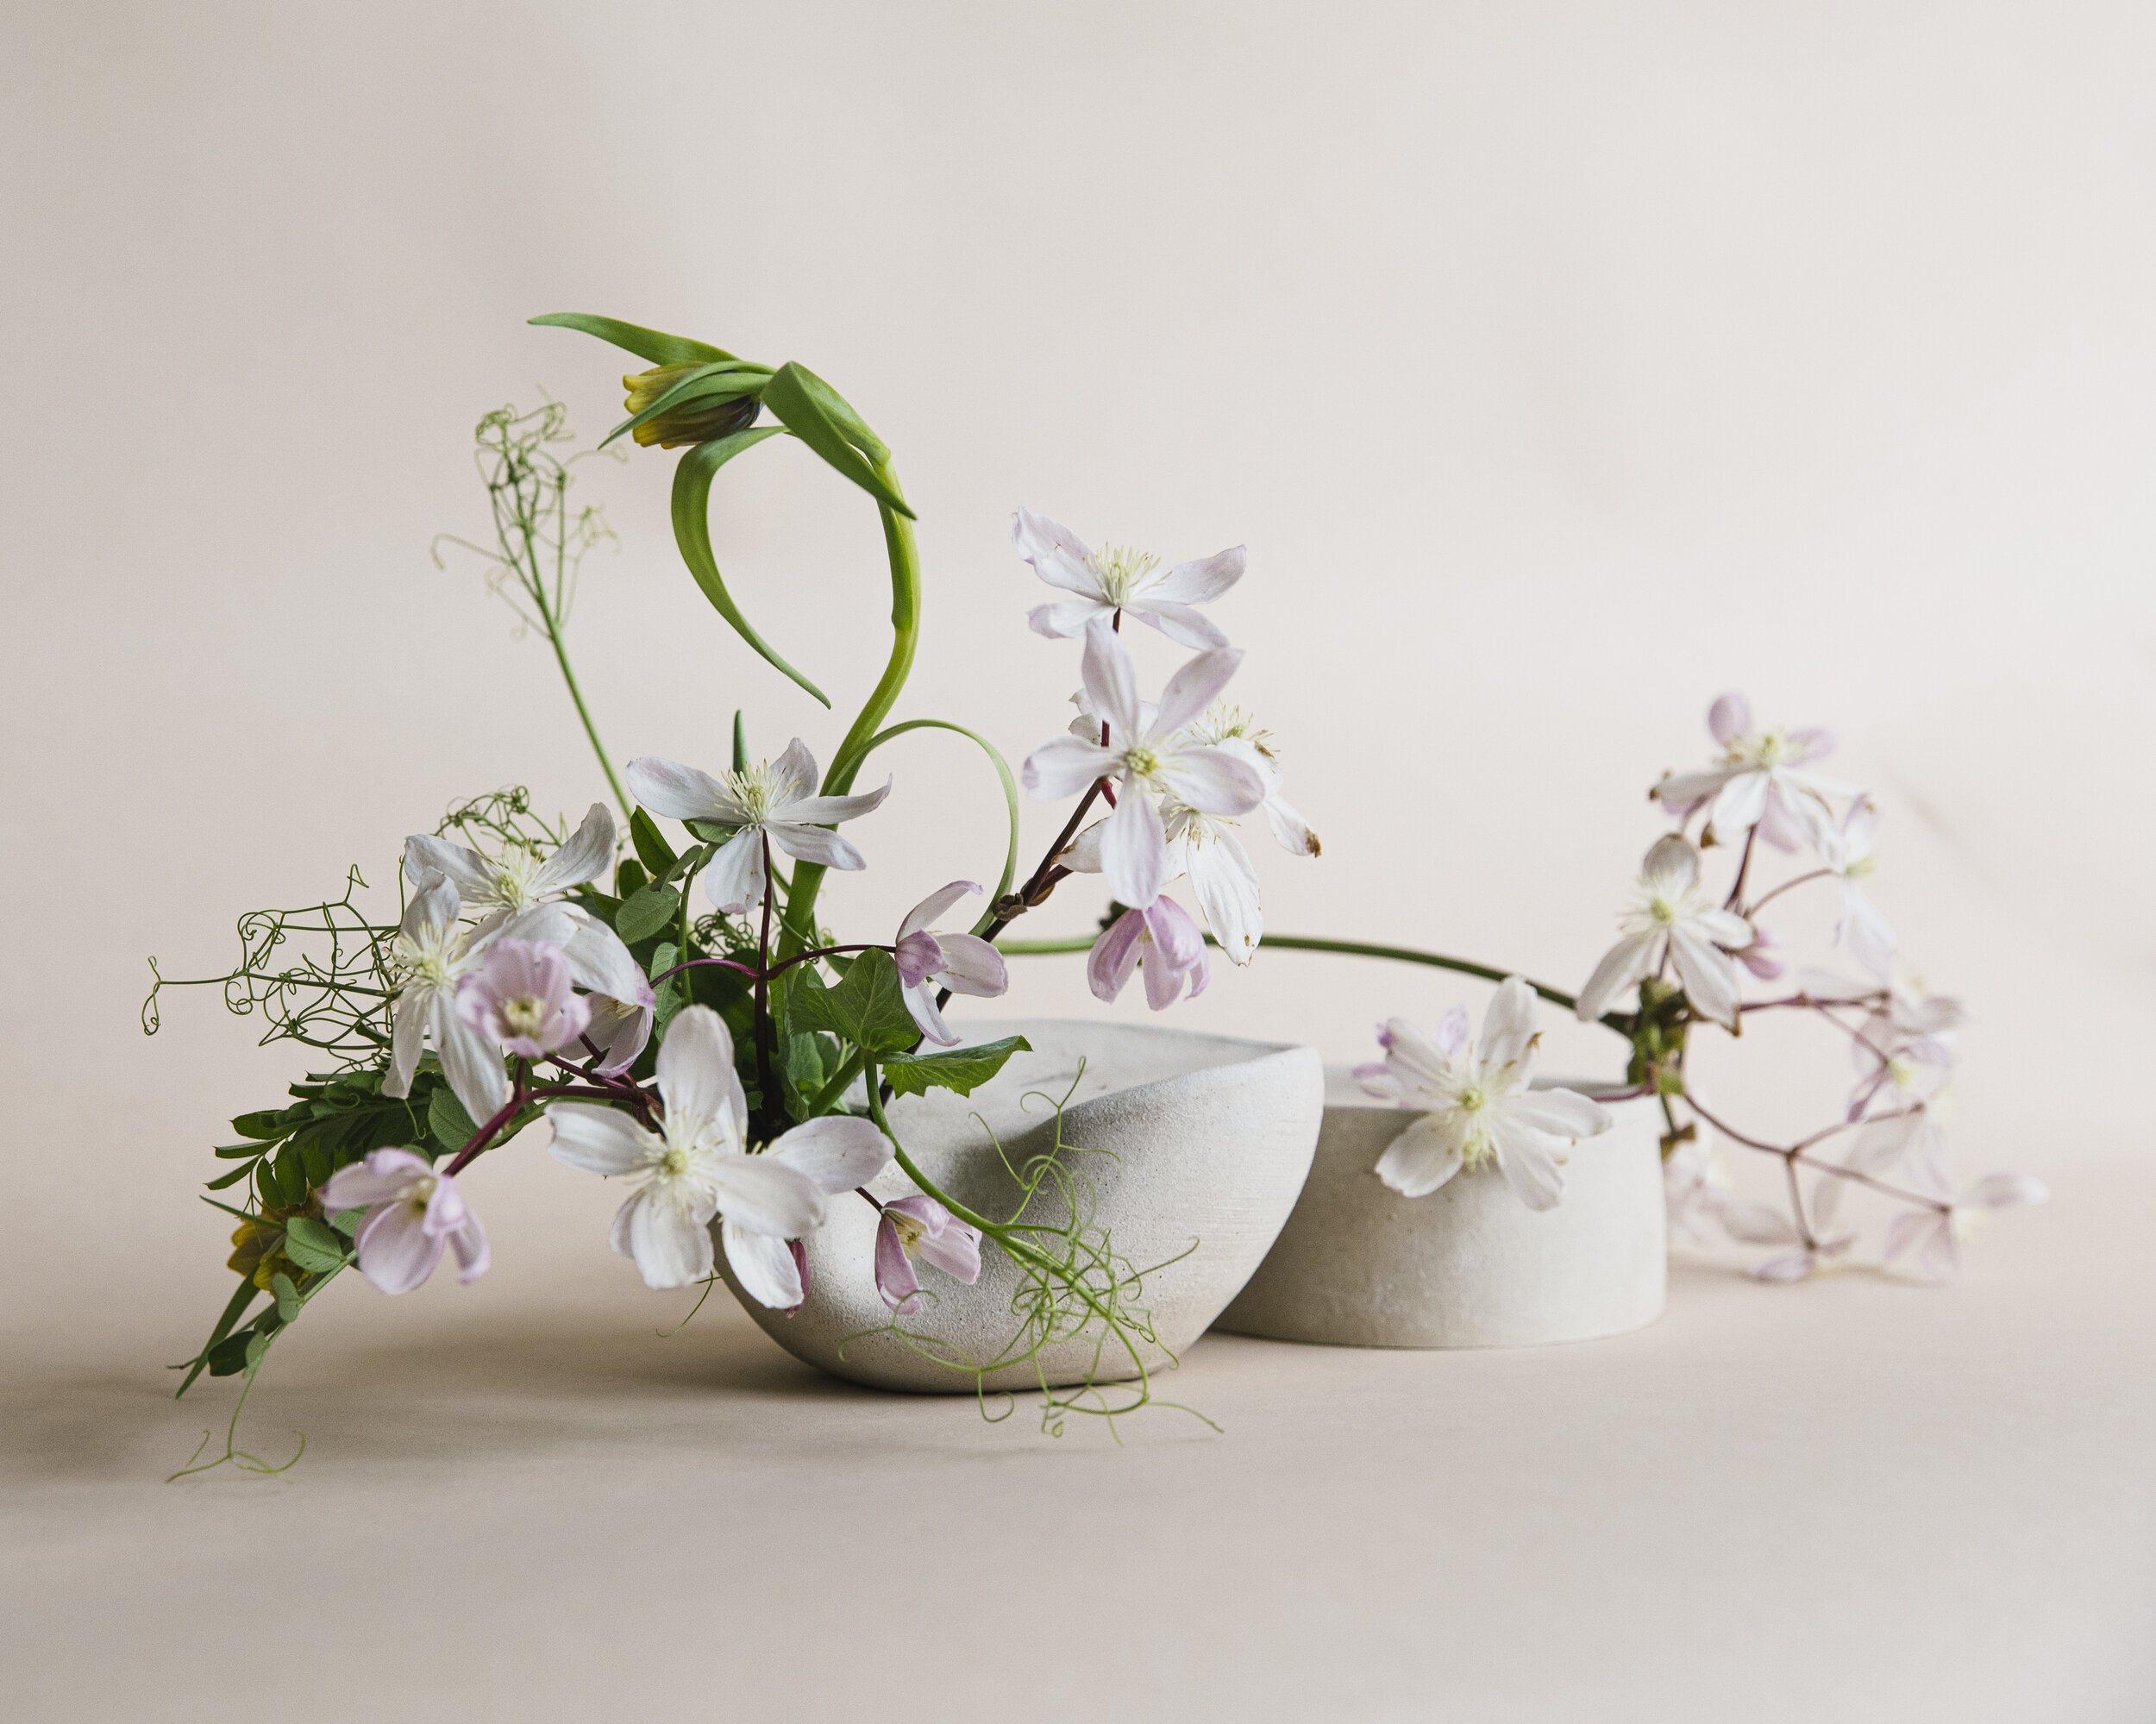 The Art of Ikebana With Floral Designers Amanda Luu and Ivanka